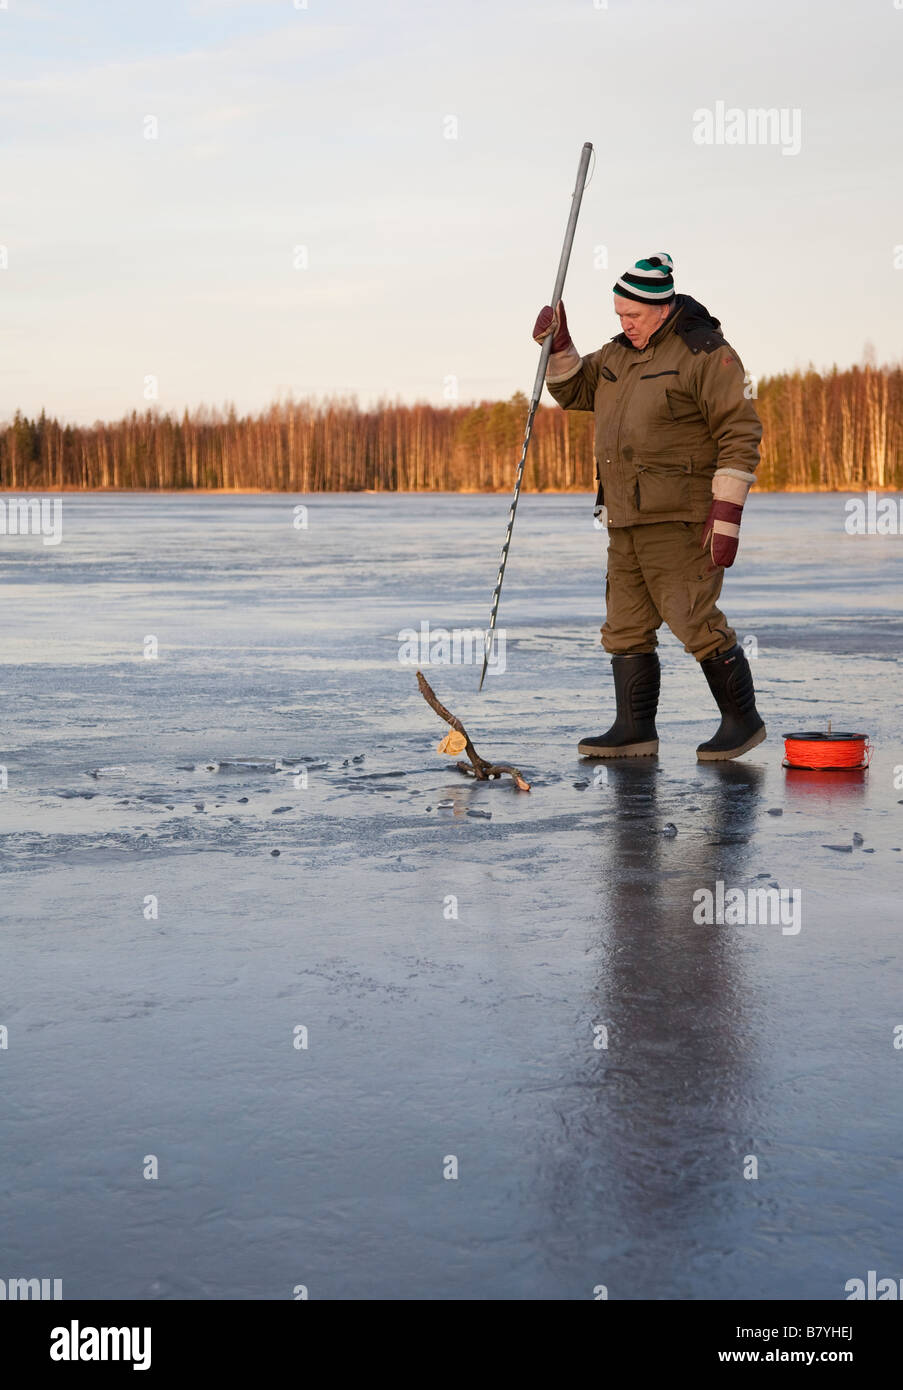 https://c8.alamy.com/comp/B7YHEJ/elderly-man-using-an-ice-saw-to-open-a-hole-to-ice-for-checking-fishing-B7YHEJ.jpg